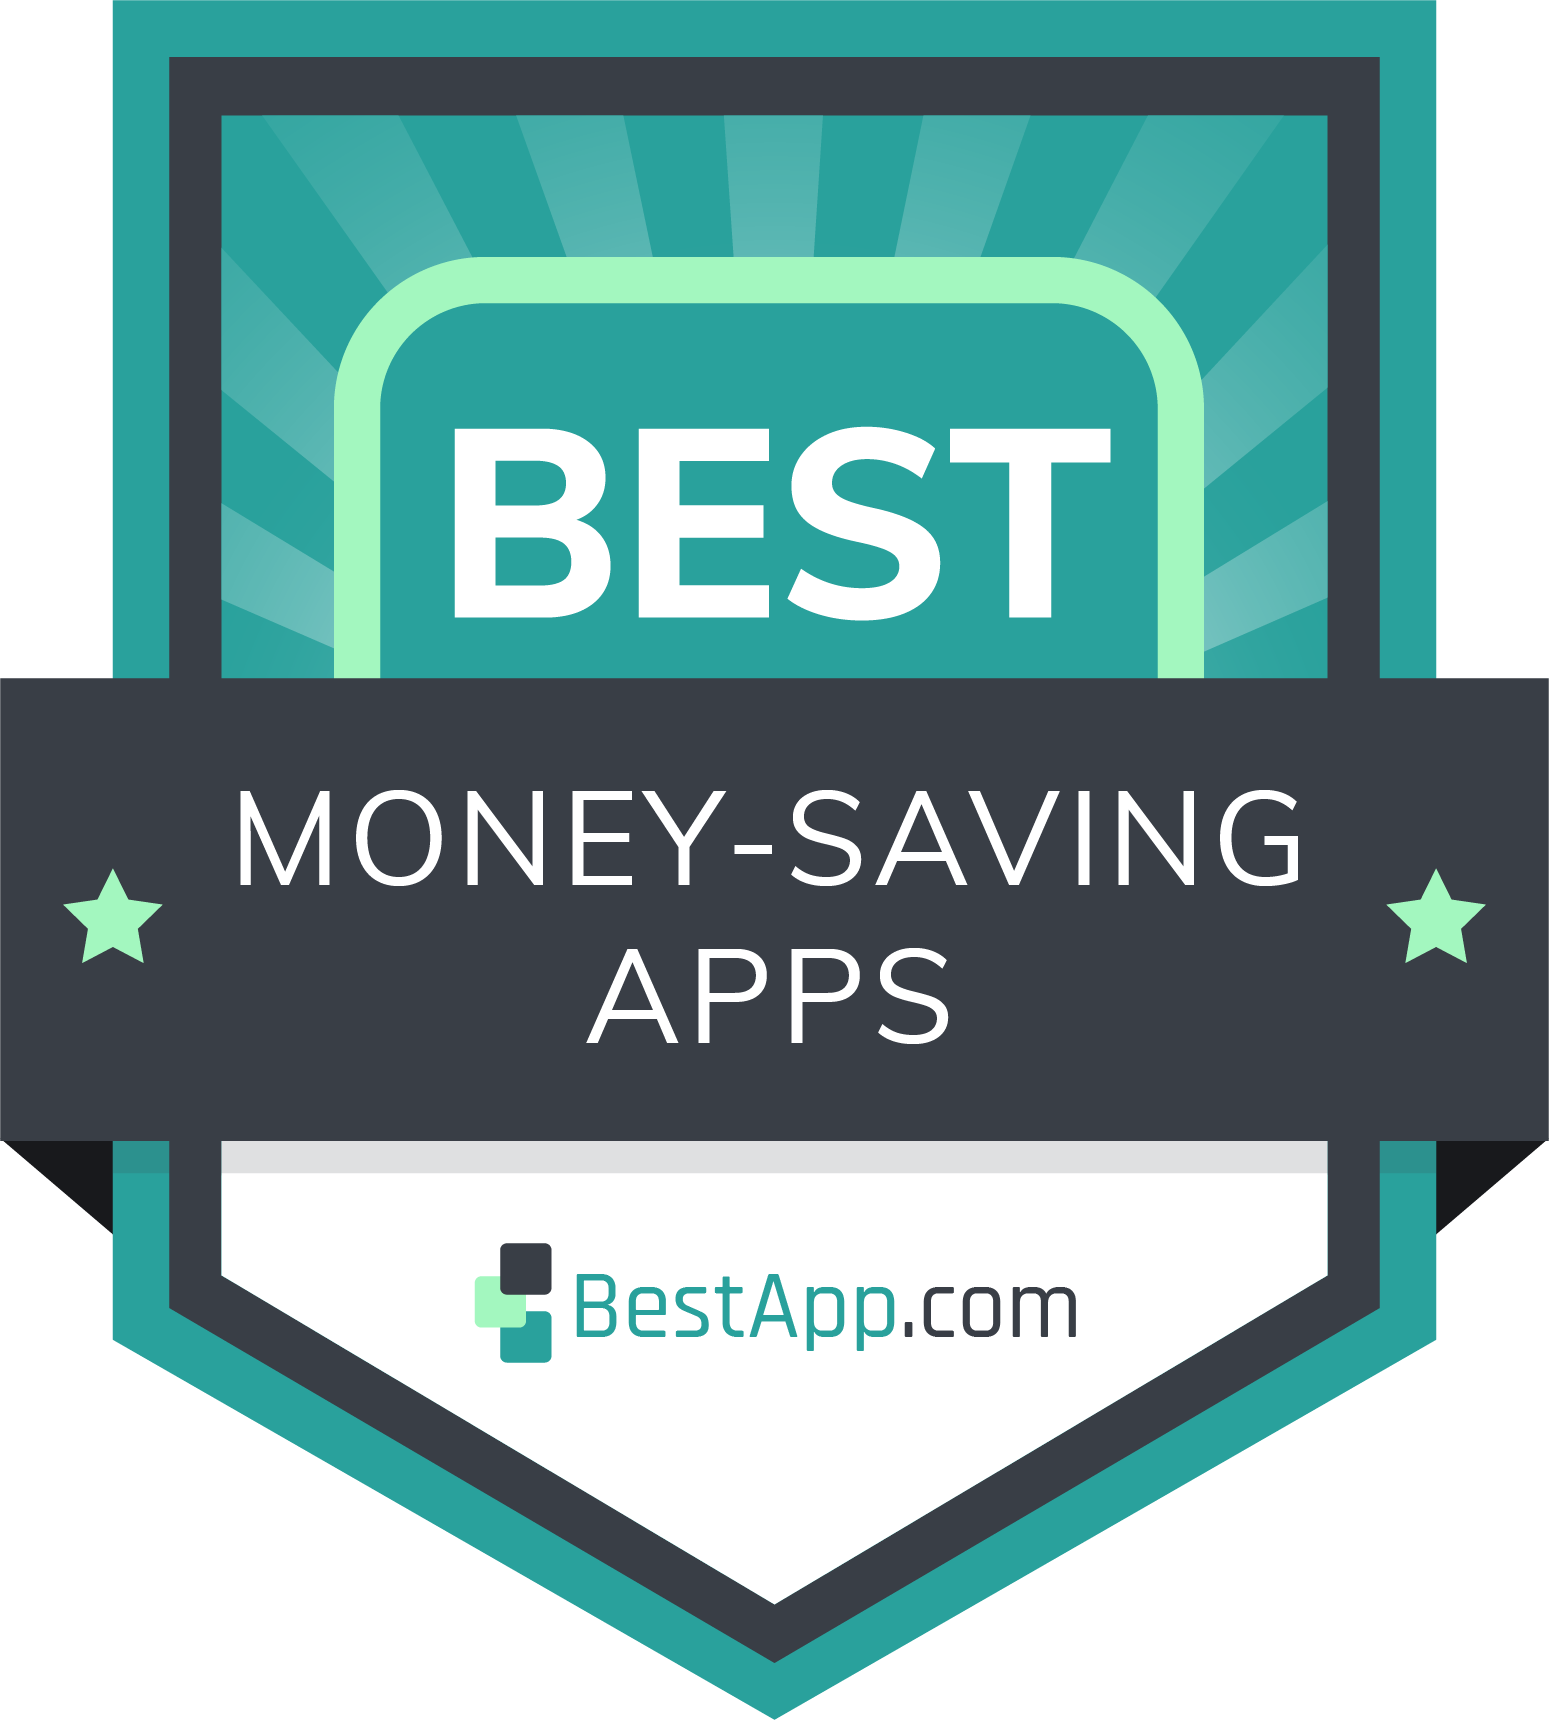 Best Money Saving Apps Badge